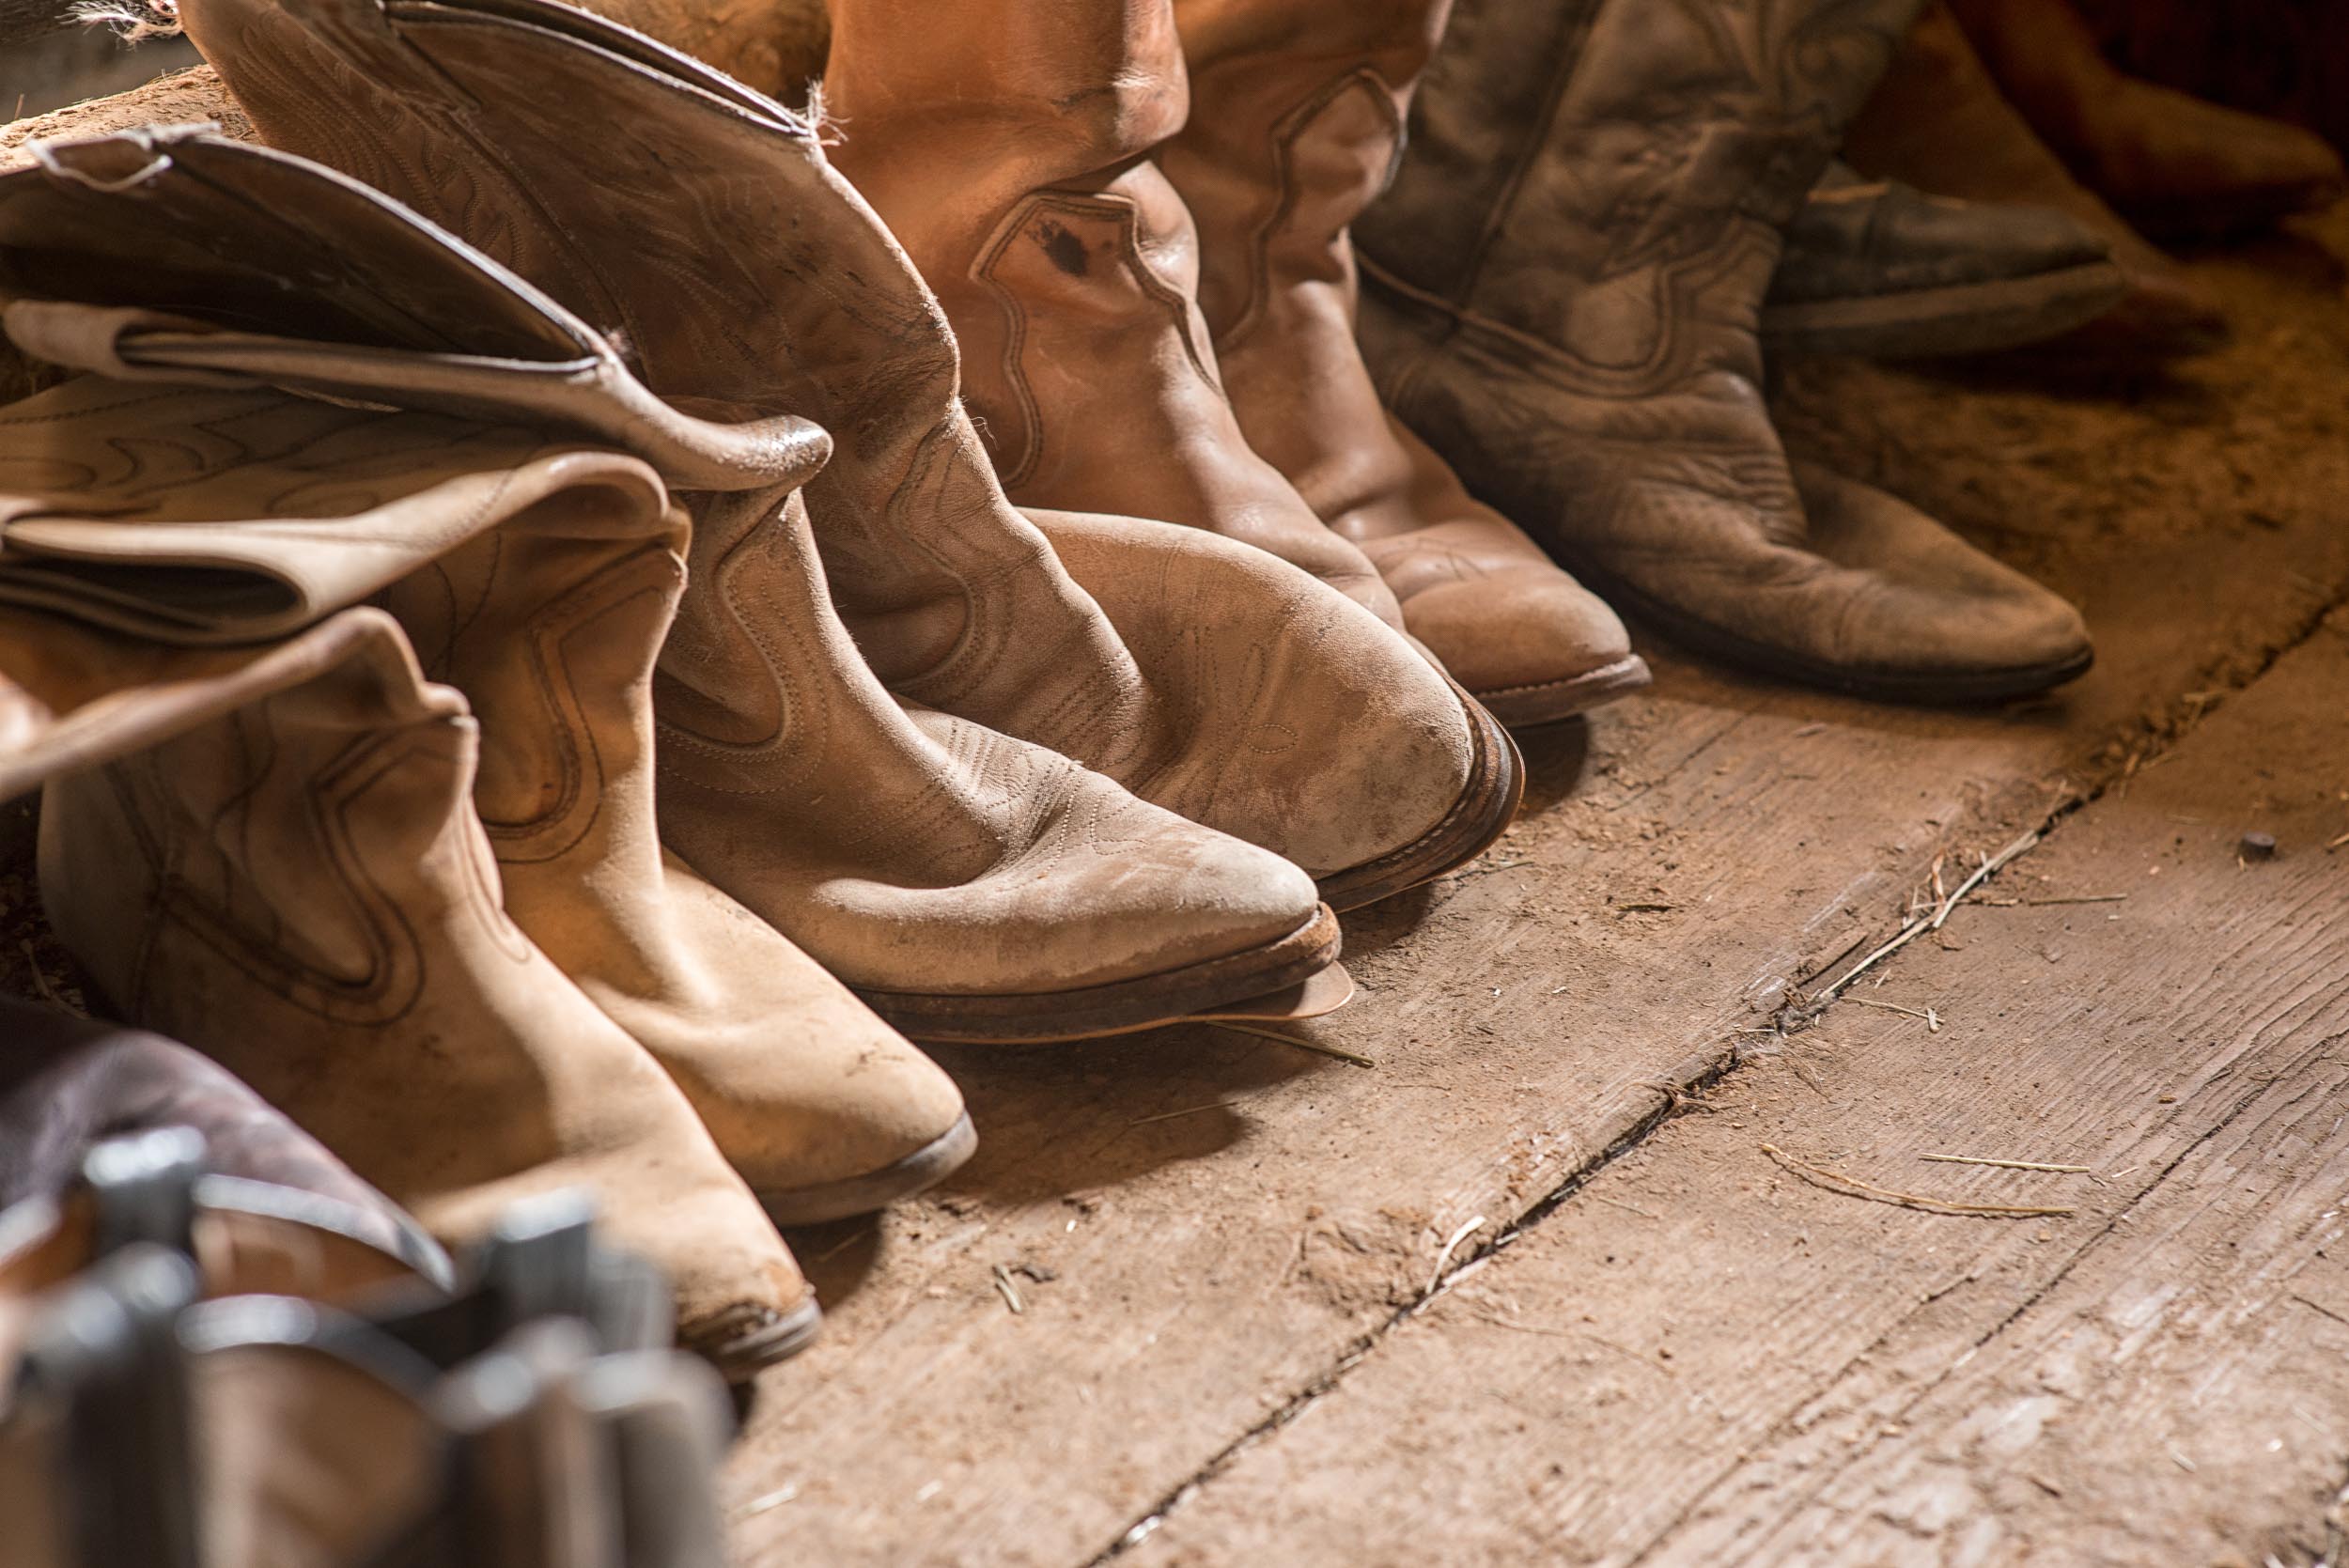 Cowboy boots at Watch Lake Lodge. Credit: Destination BC/Michael Bednar